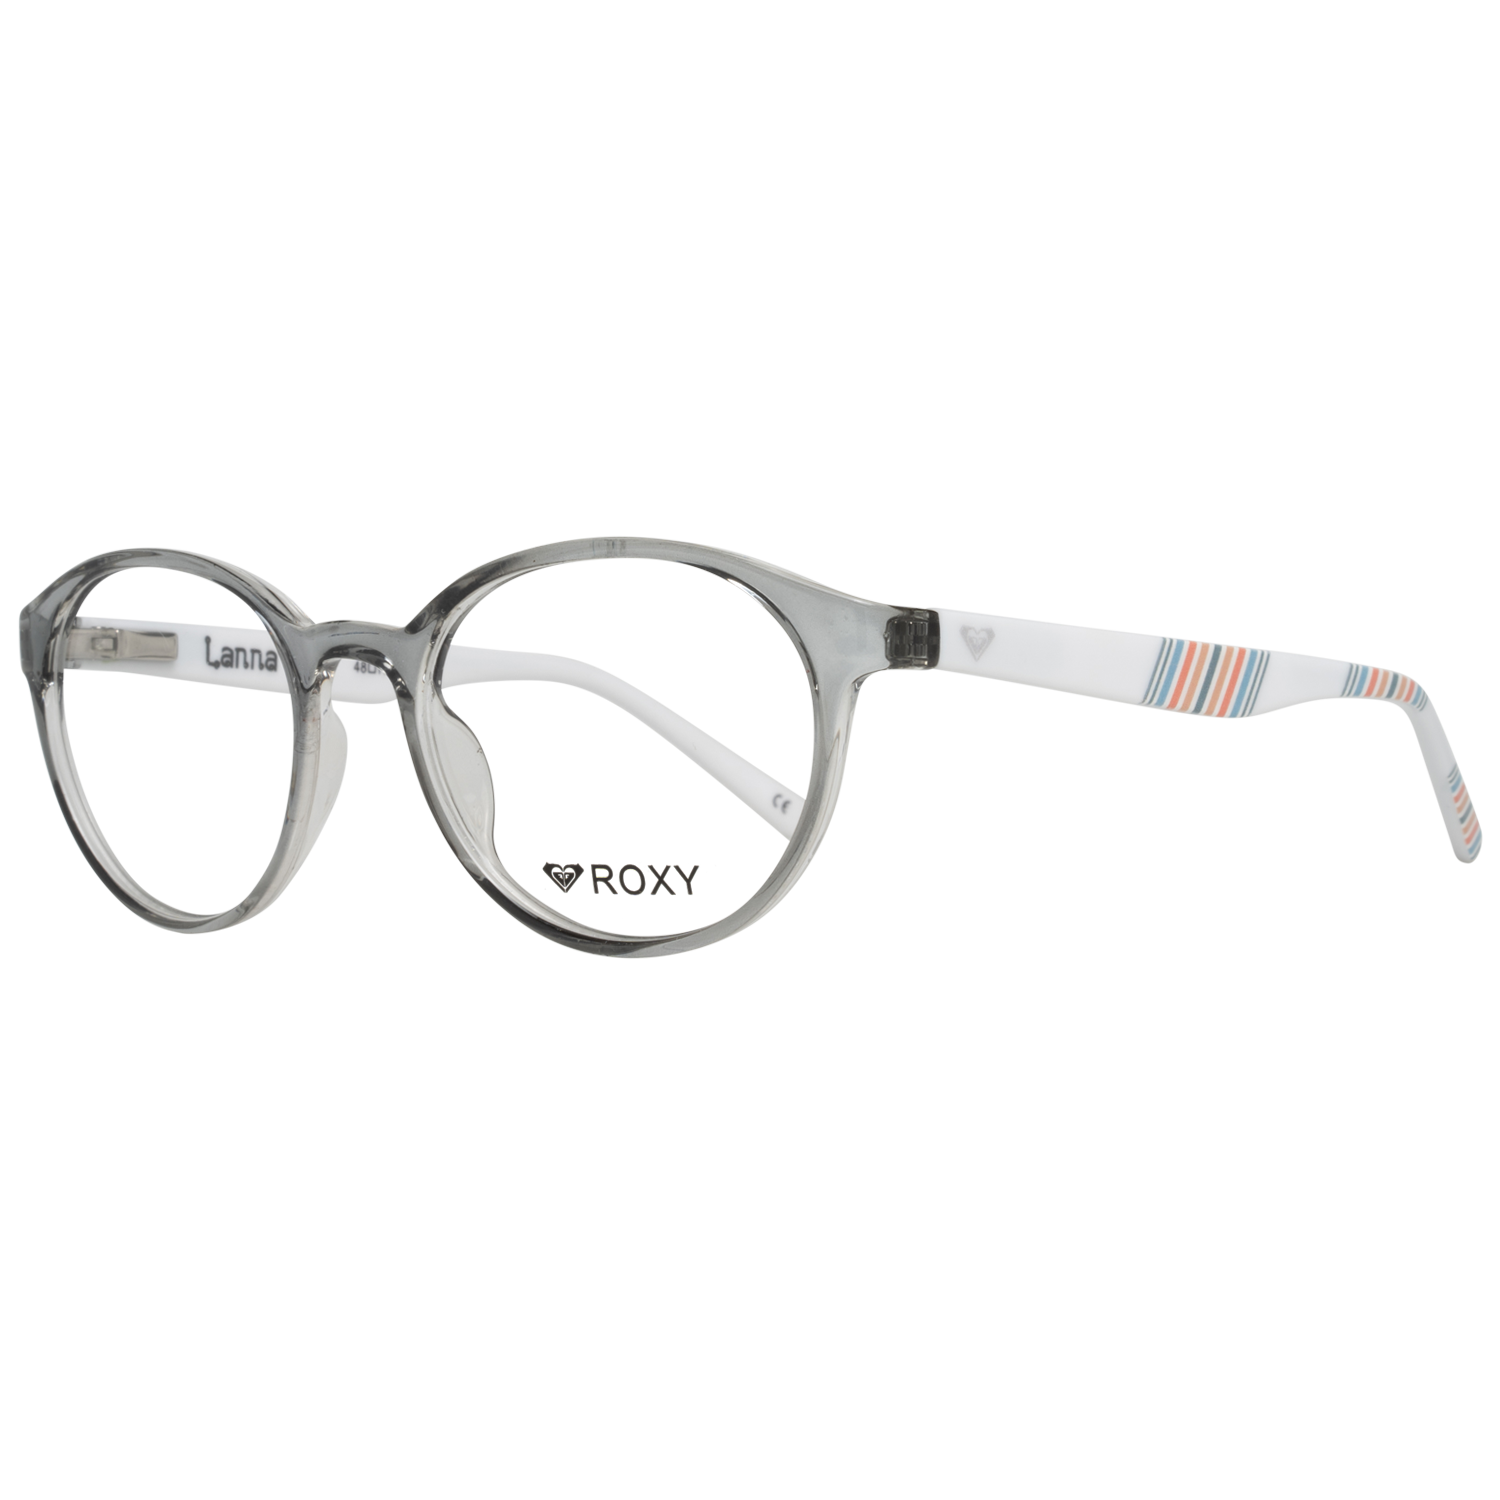 Roxy Frames Roxy Optical Frame ERJEG03049 EBLU 48 Eyeglasses Eyewear UK USA Australia 